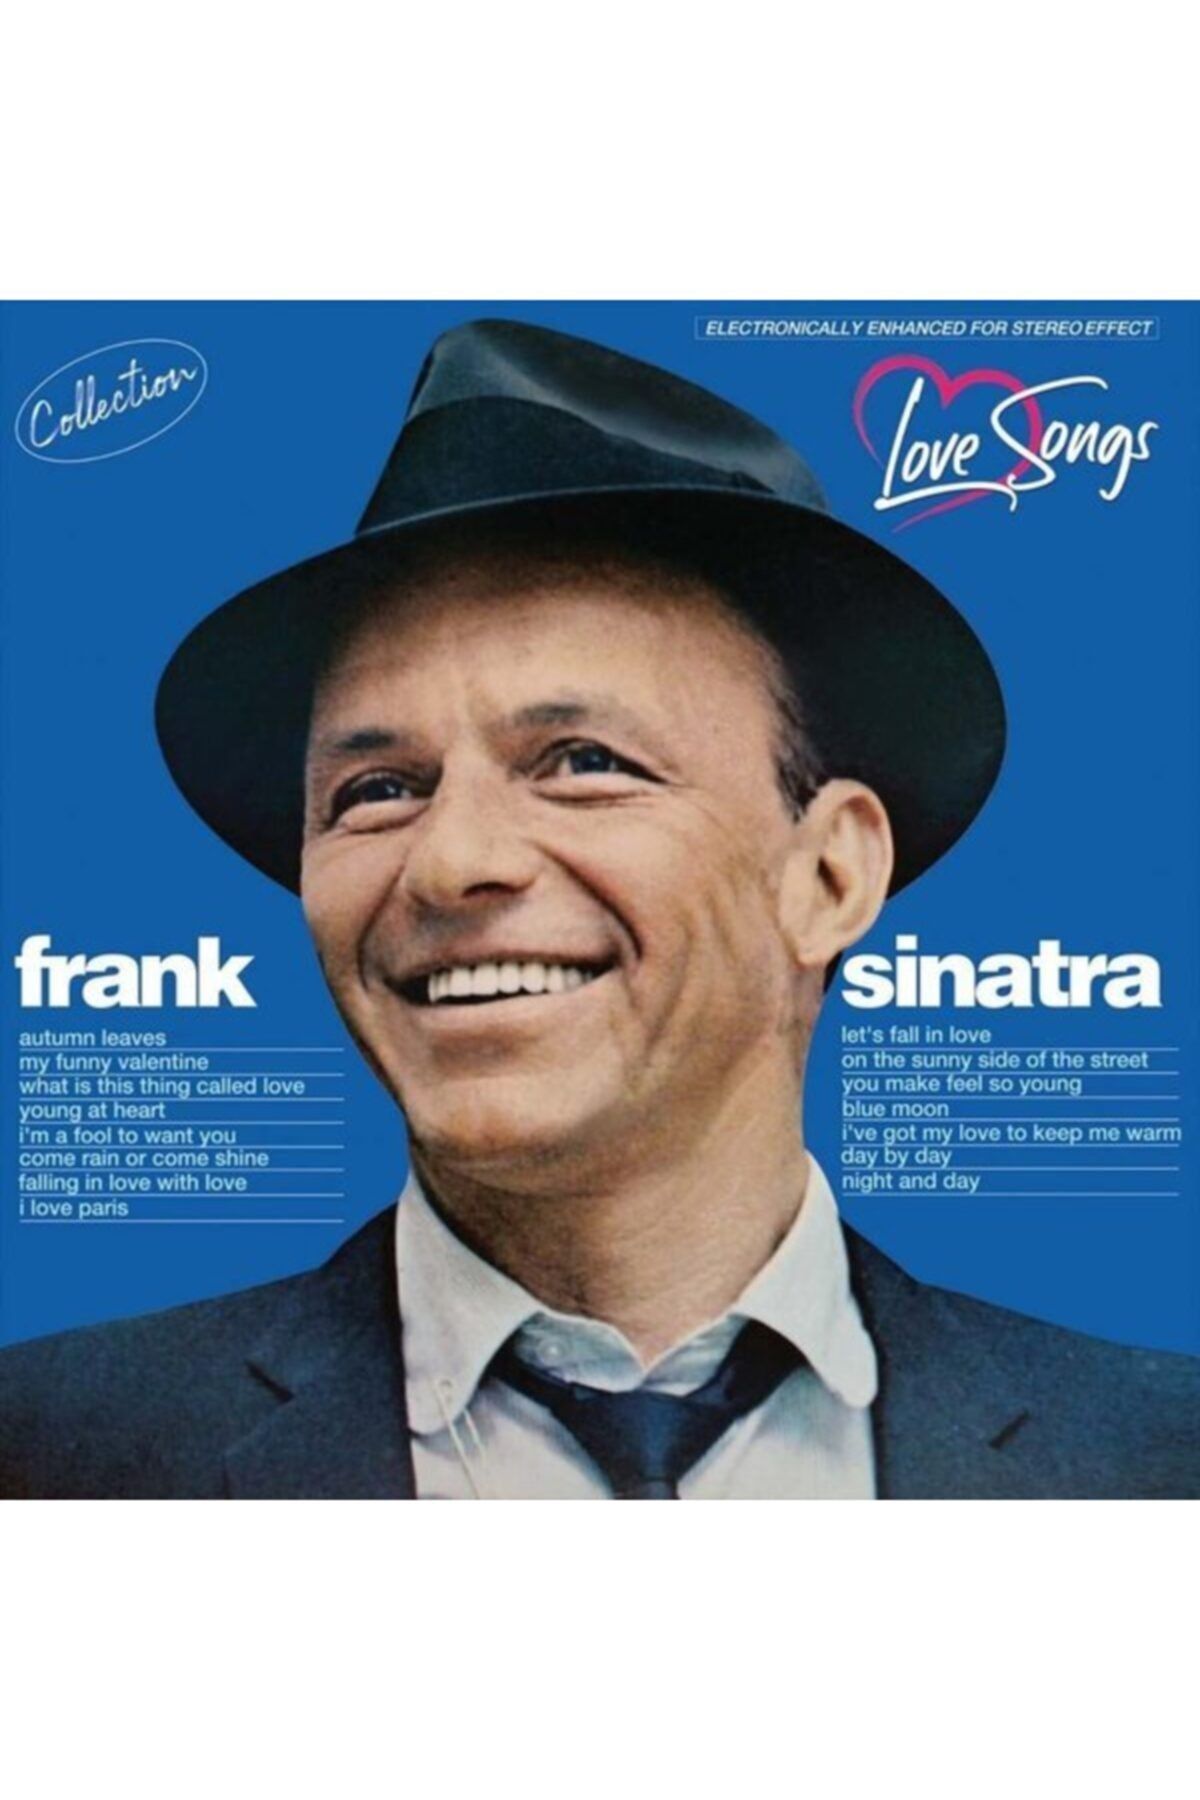 Frank Sinatra telephone. A fella with an Umbrella Frank Sinatra.